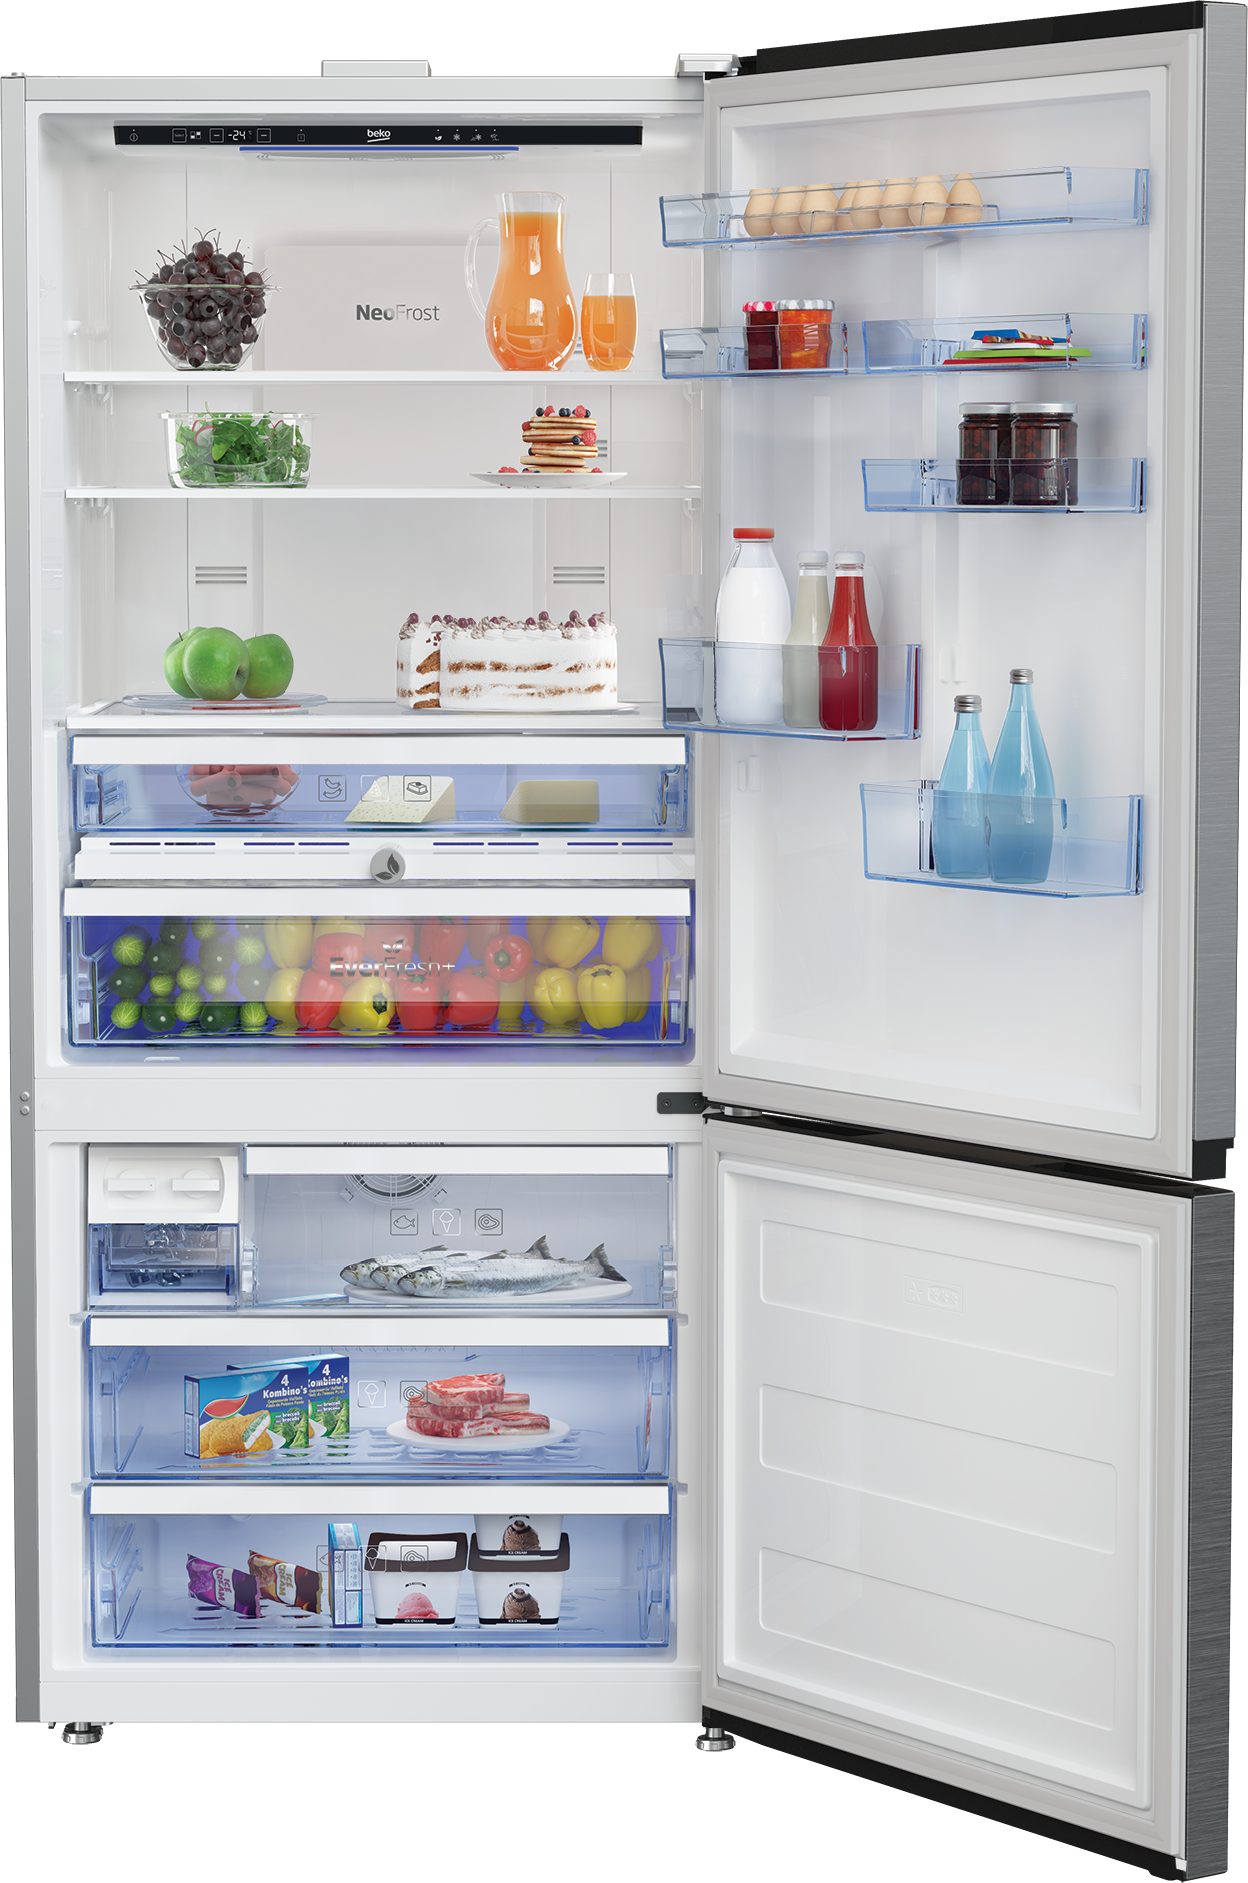 Beko Refrigerator 720 Liters A++ - Stainless Steel